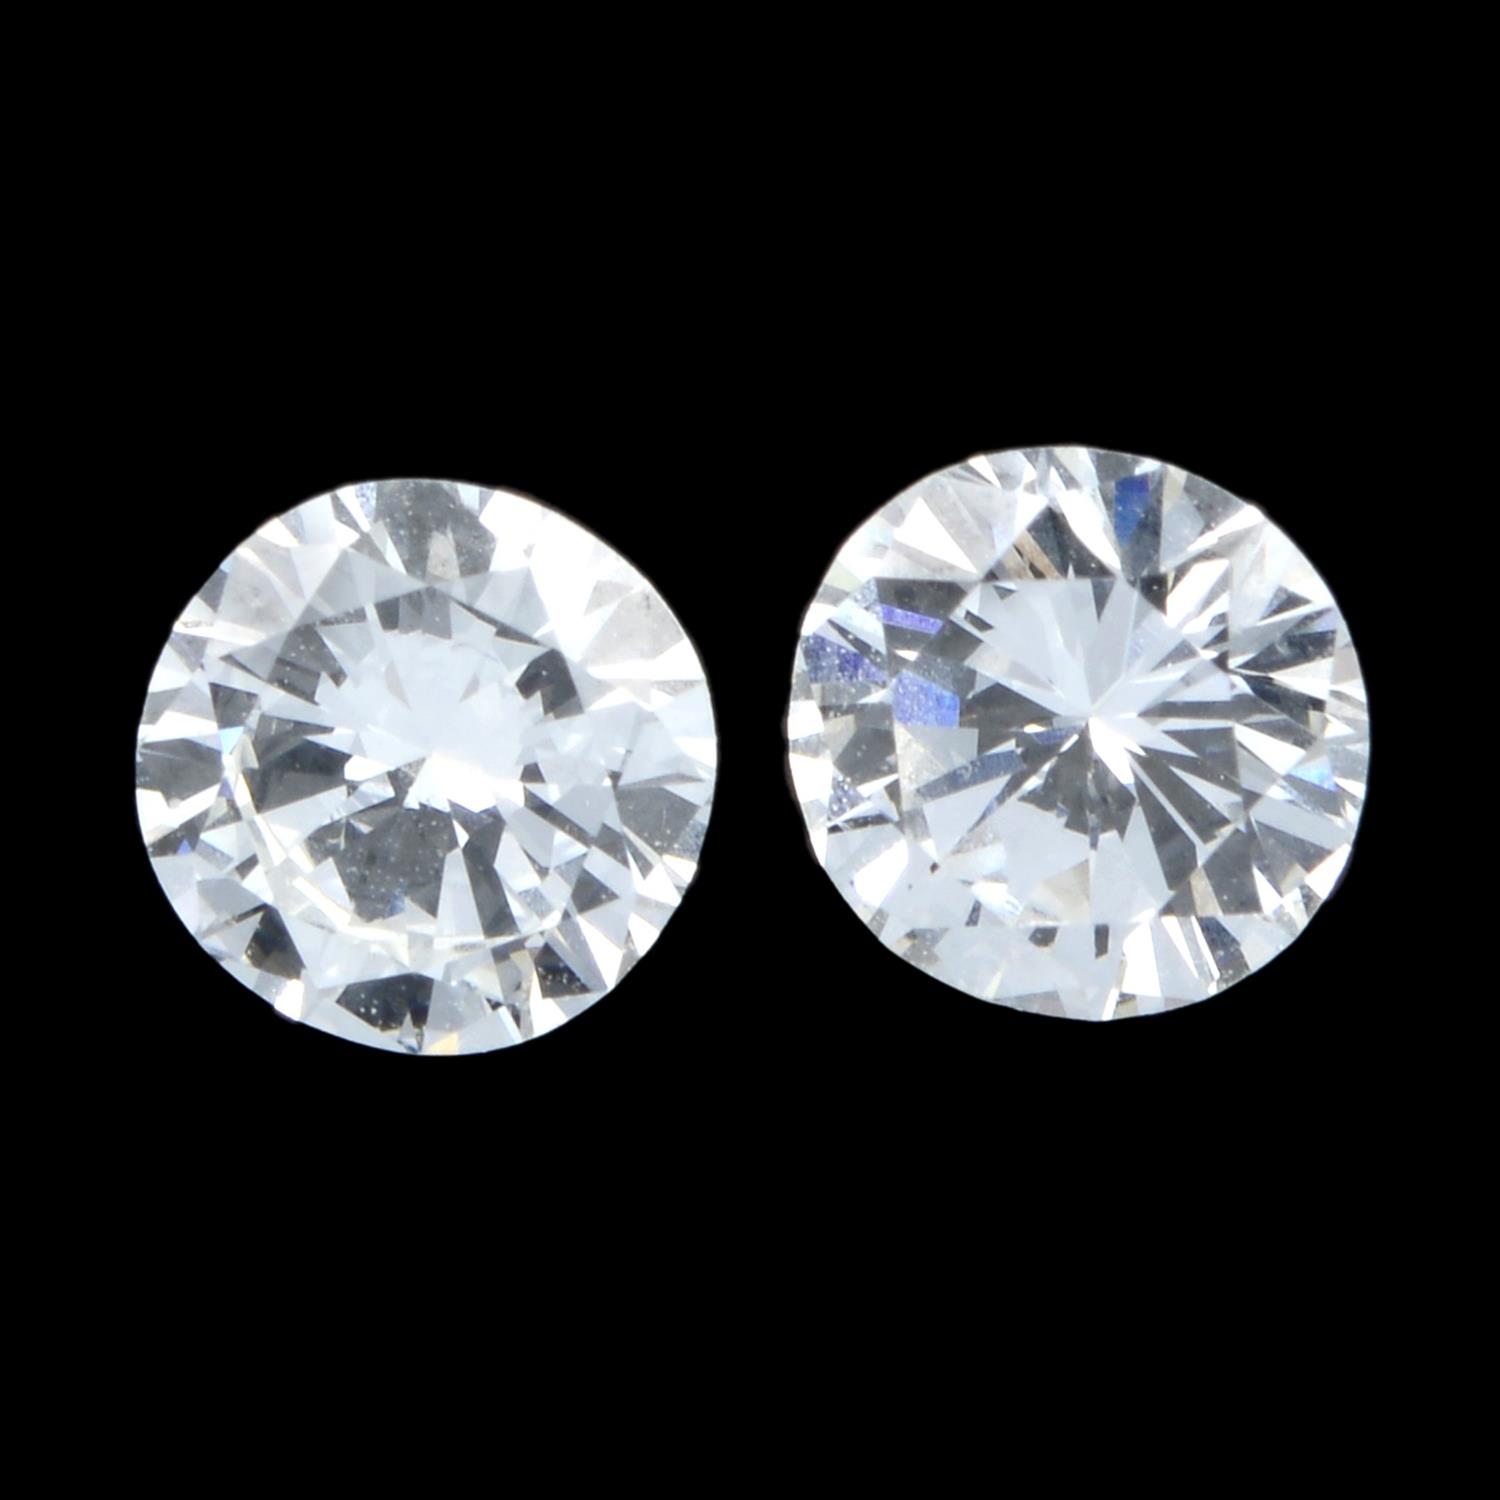 Pair of brilliant cut diamonds weighing 0.50ct